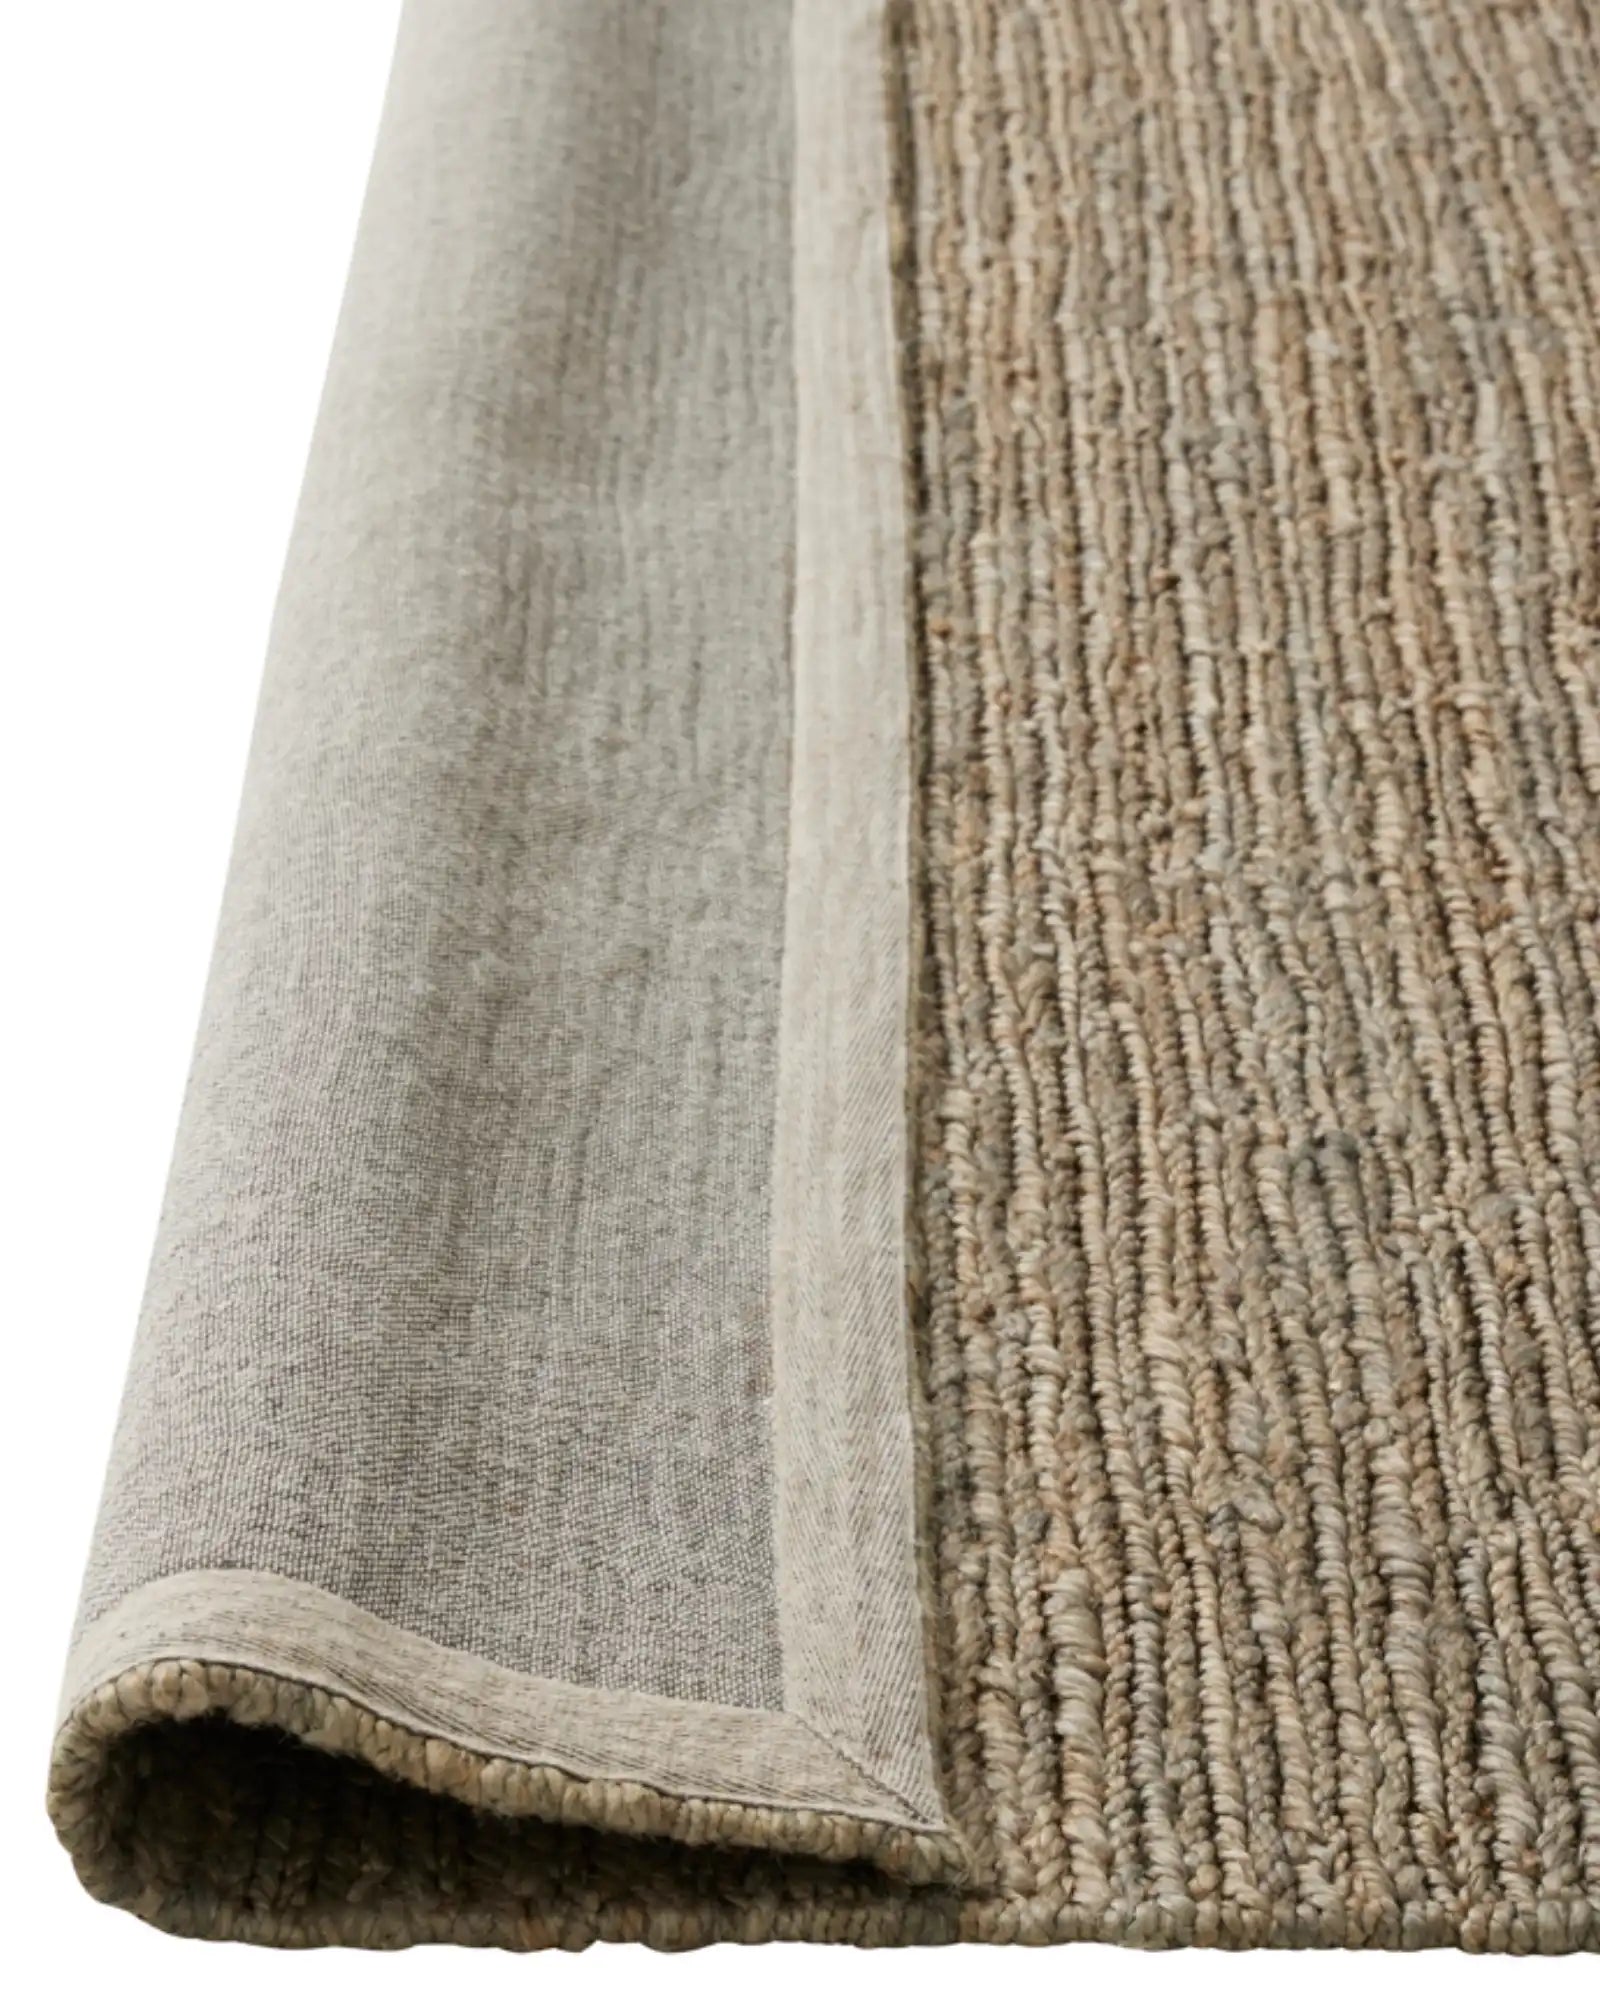 Weave Suffolk Floor Rug - Mineral RSK03MINE